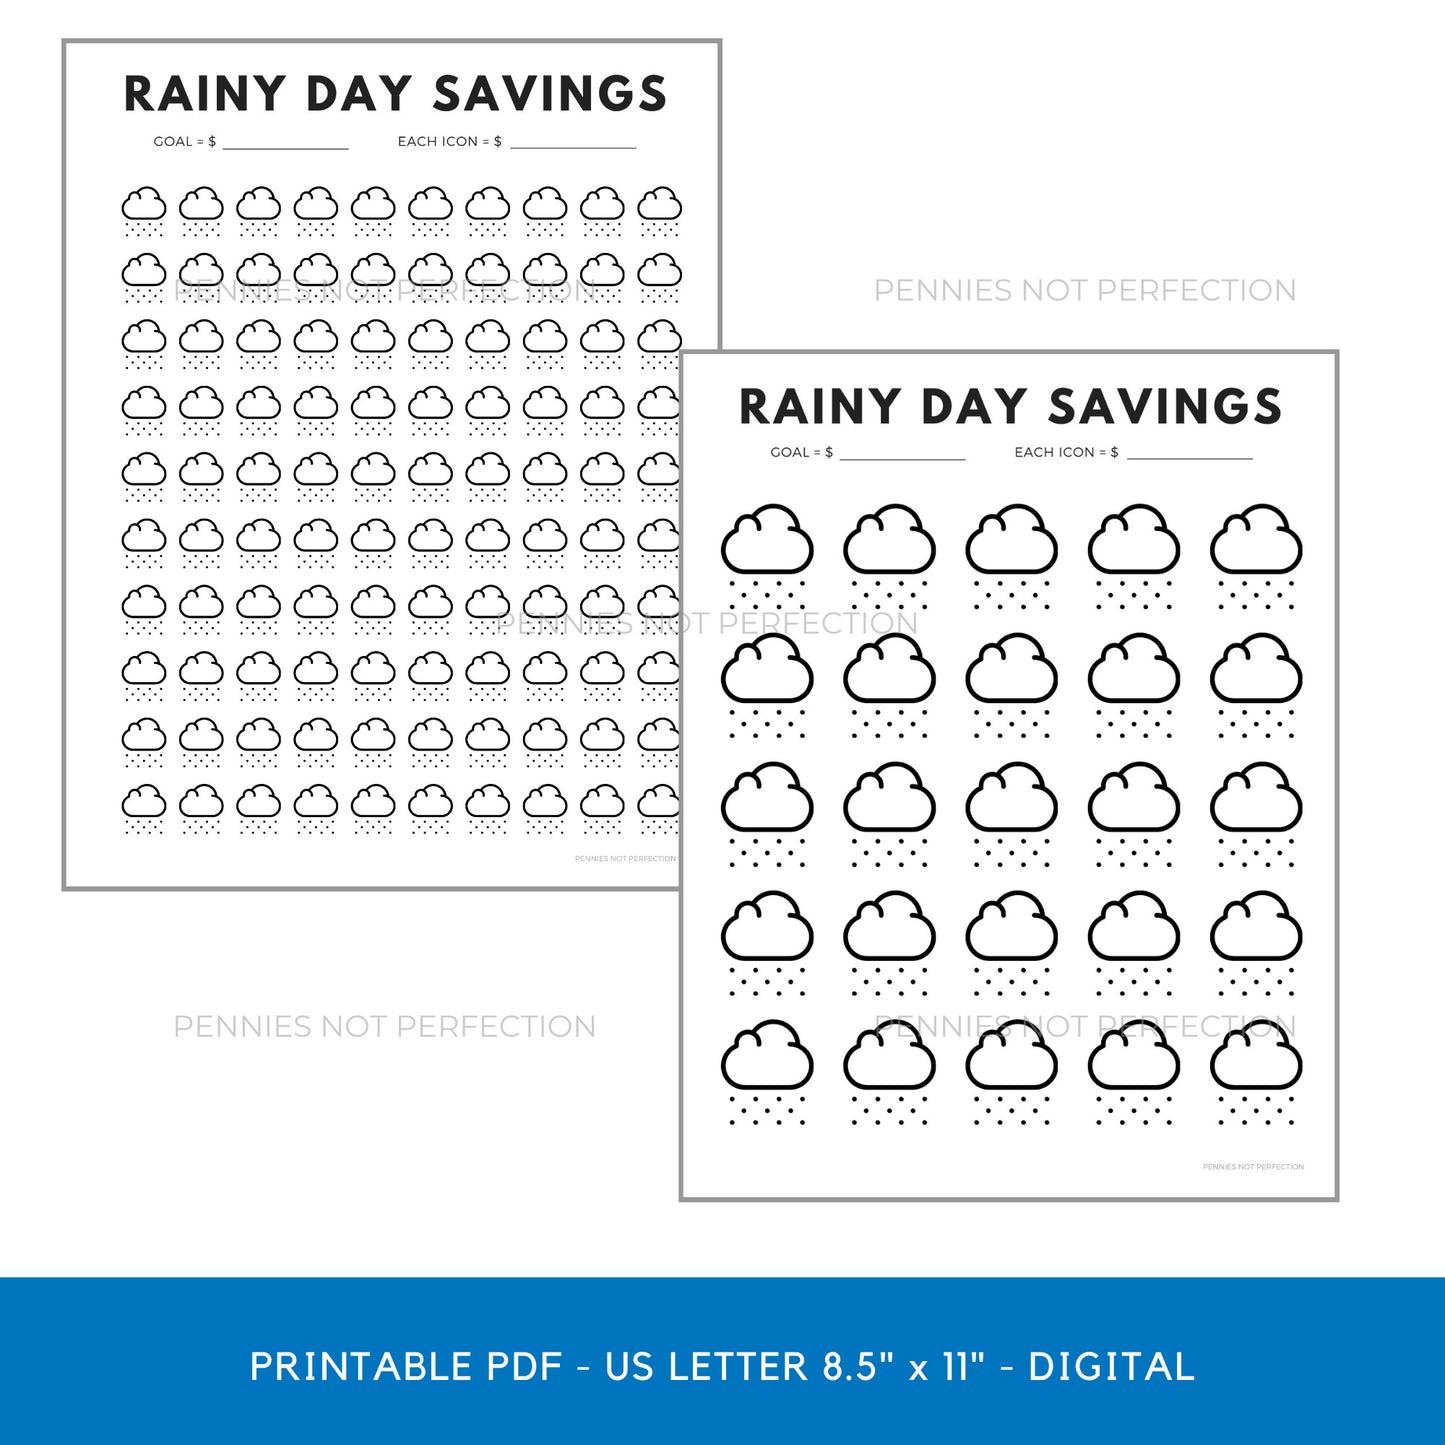 Rainy Day Savings Tracker Printable | Savings Tracker Insert